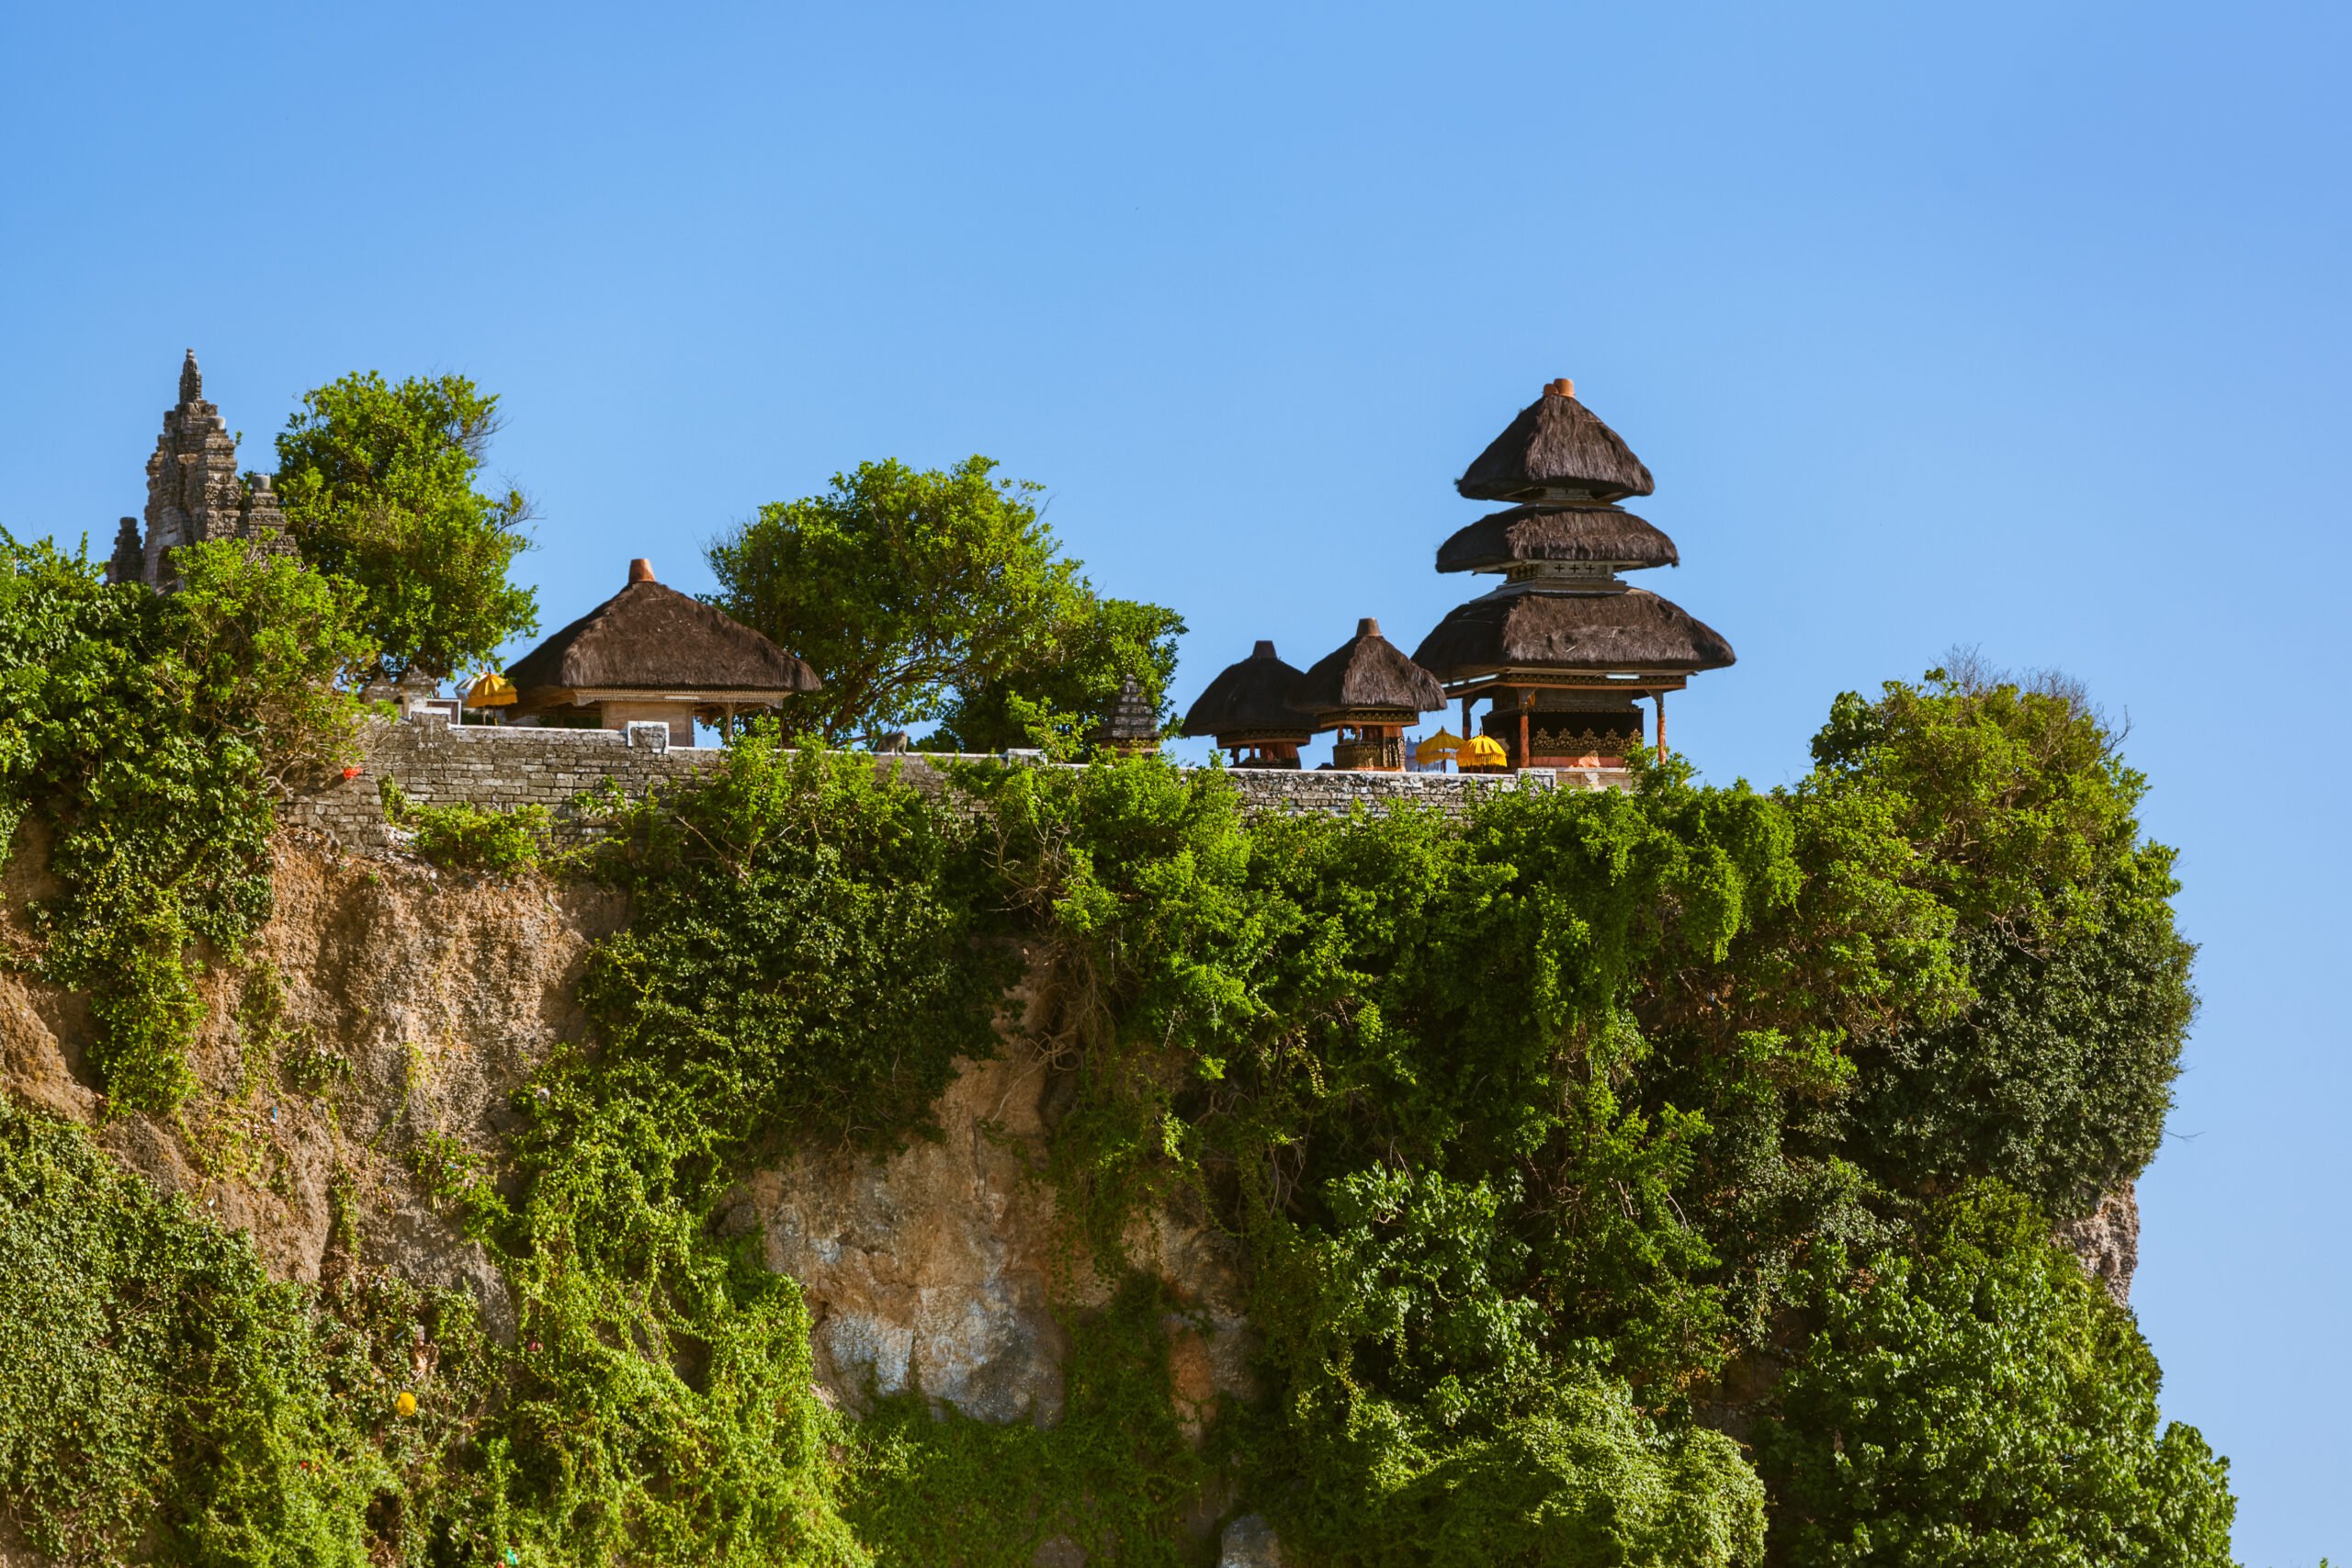 Visit The Famous Uluwatu Temple During The 2 Day Western Bali And Sunrise Hike At Mt Batur From Sanur, Nusa Dua, Seminyak And Tanjung Benoa